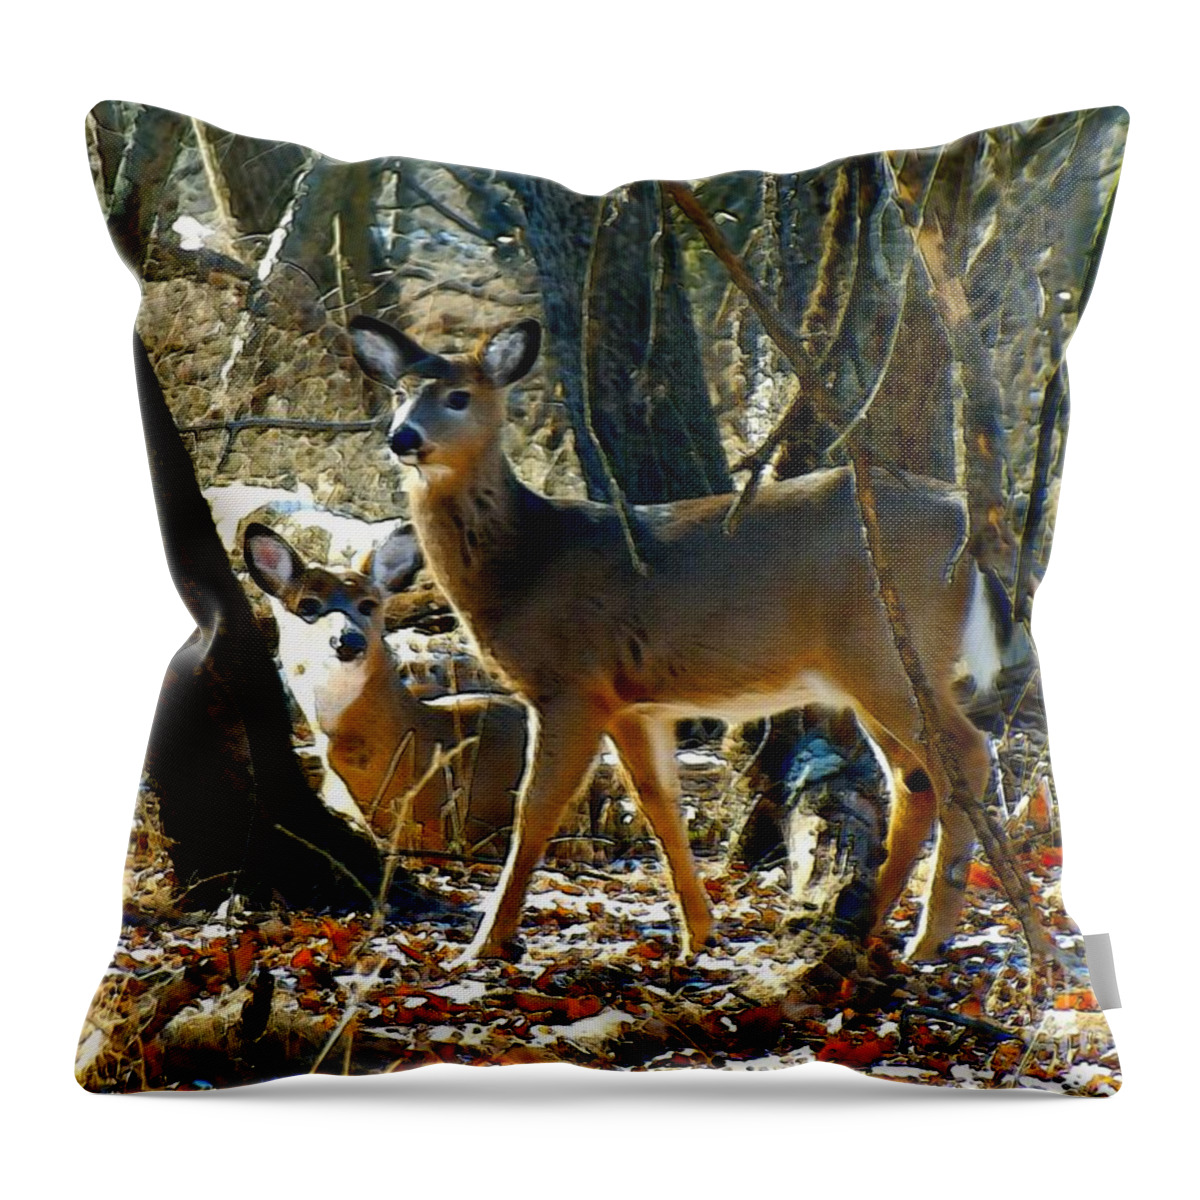 Deer Friends Throw Pillow featuring the photograph Deer Friends by Robyn King